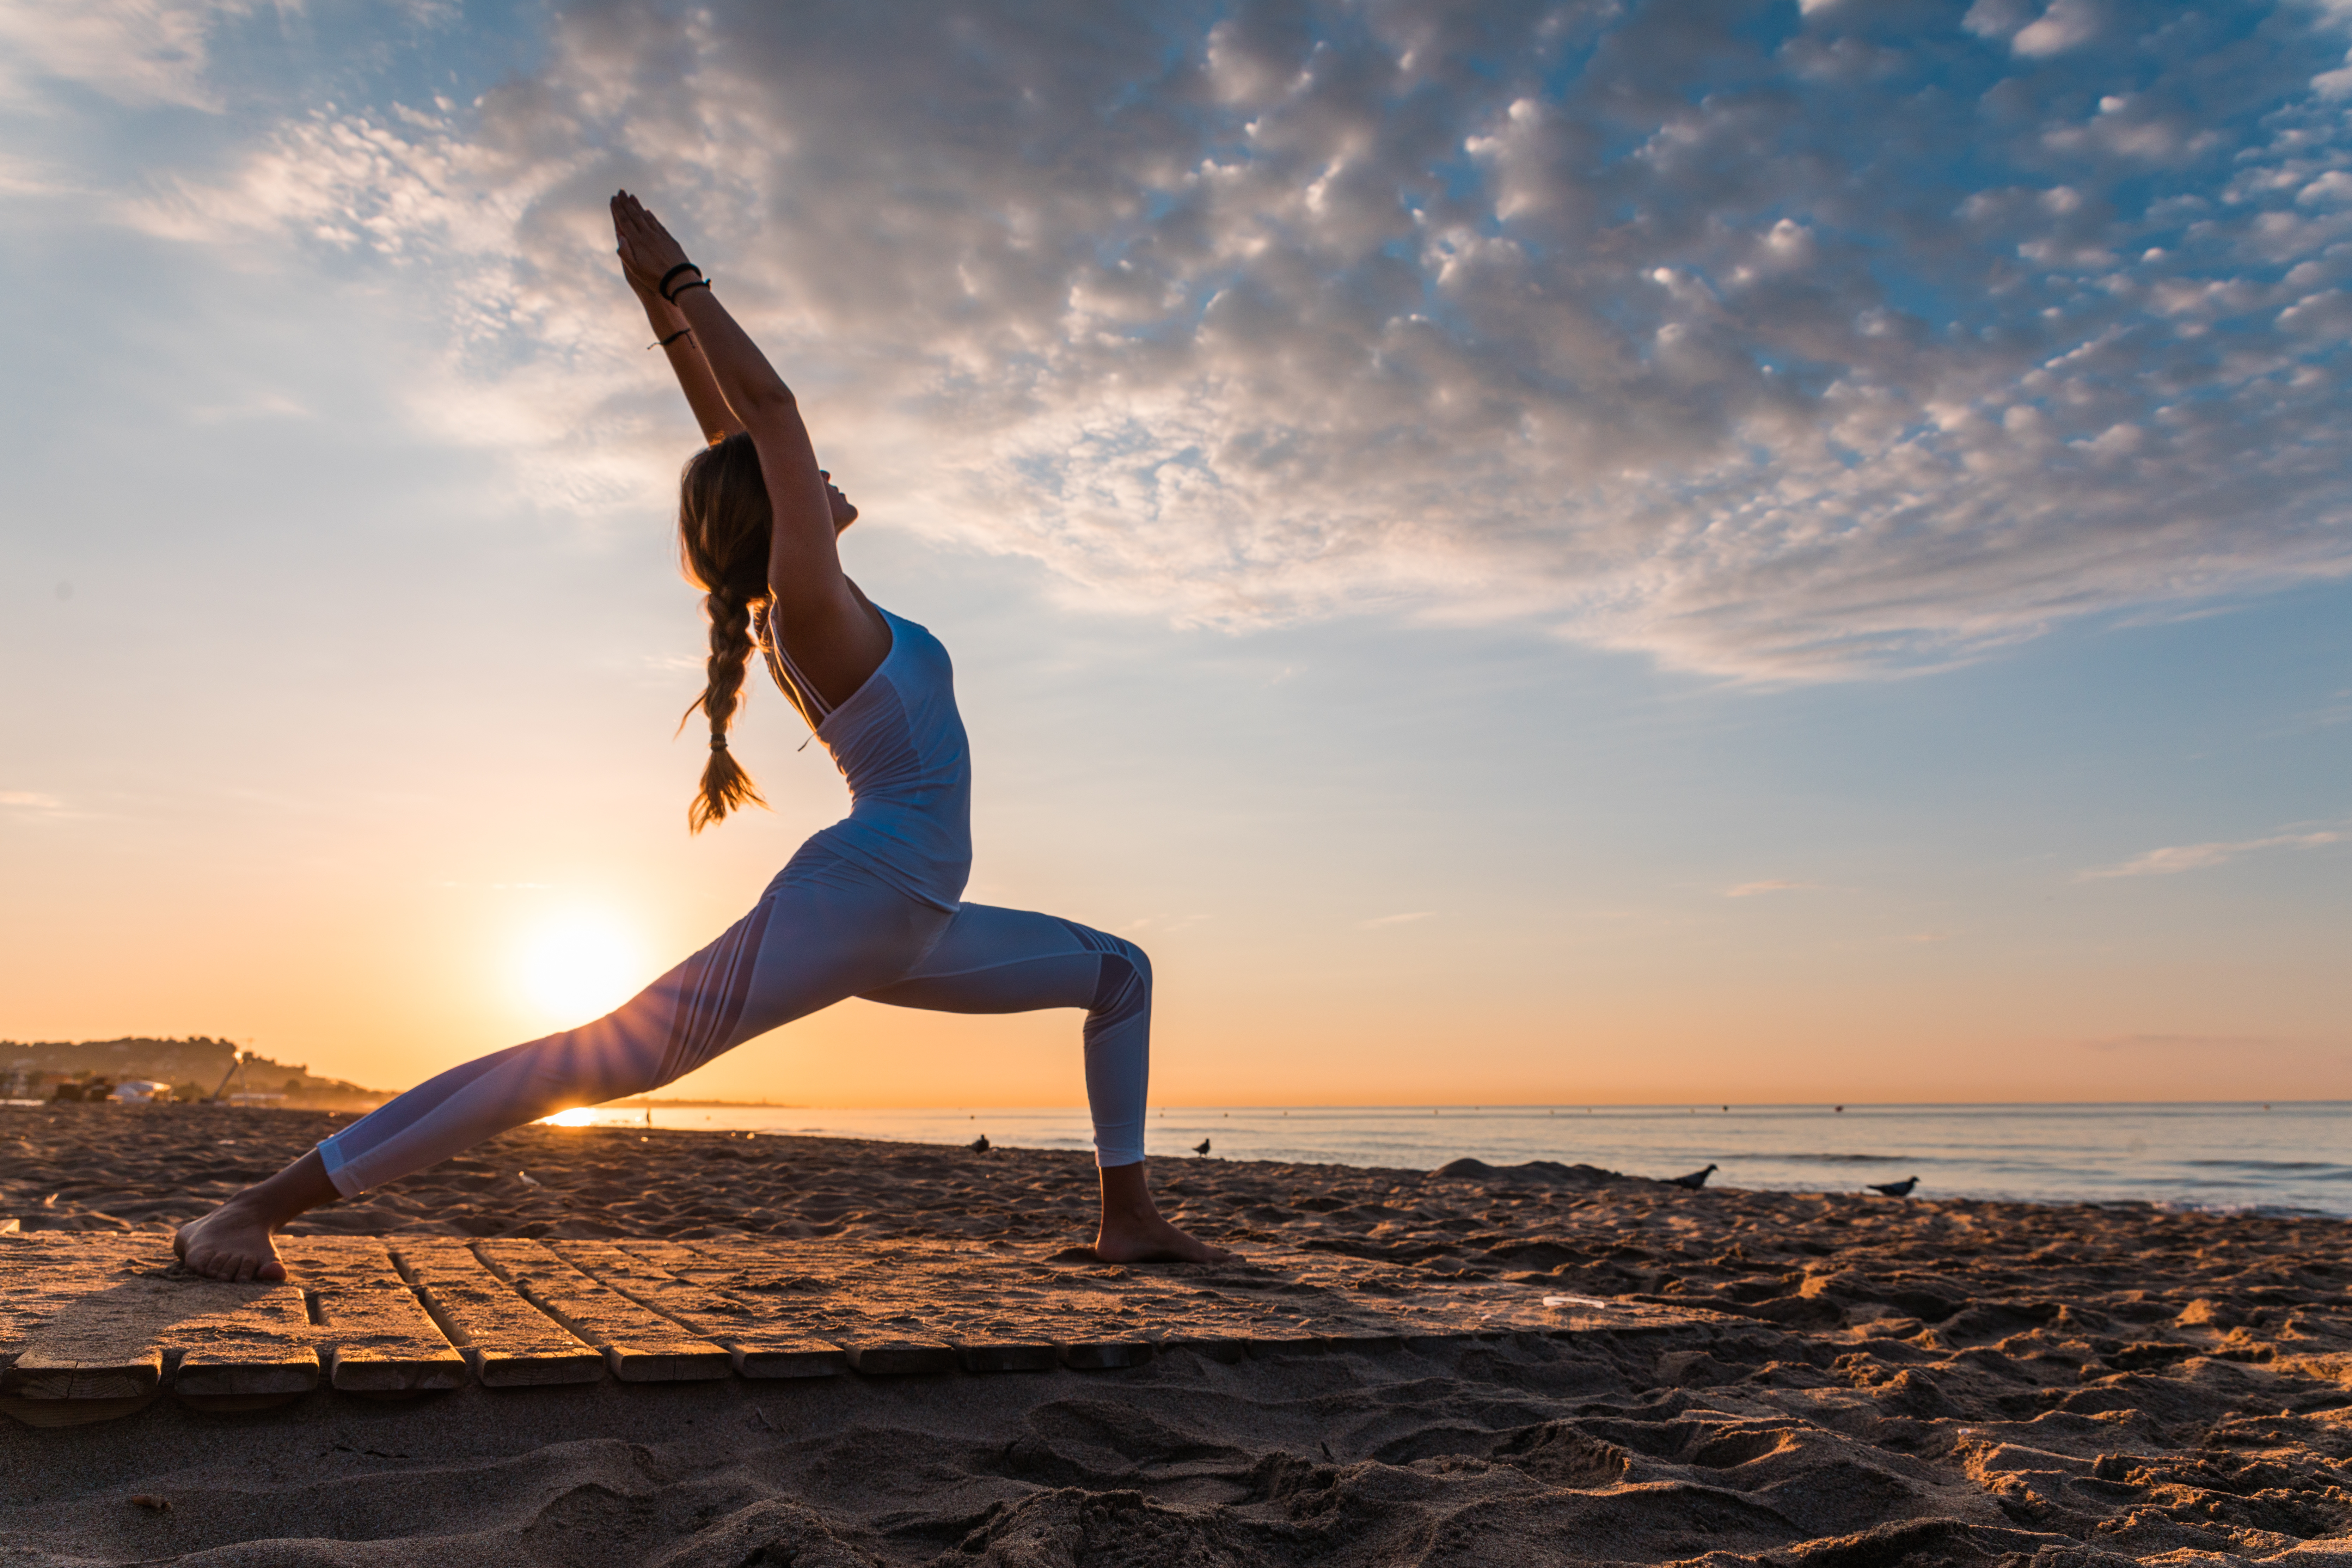 Try Beach Yoga in Hawaii